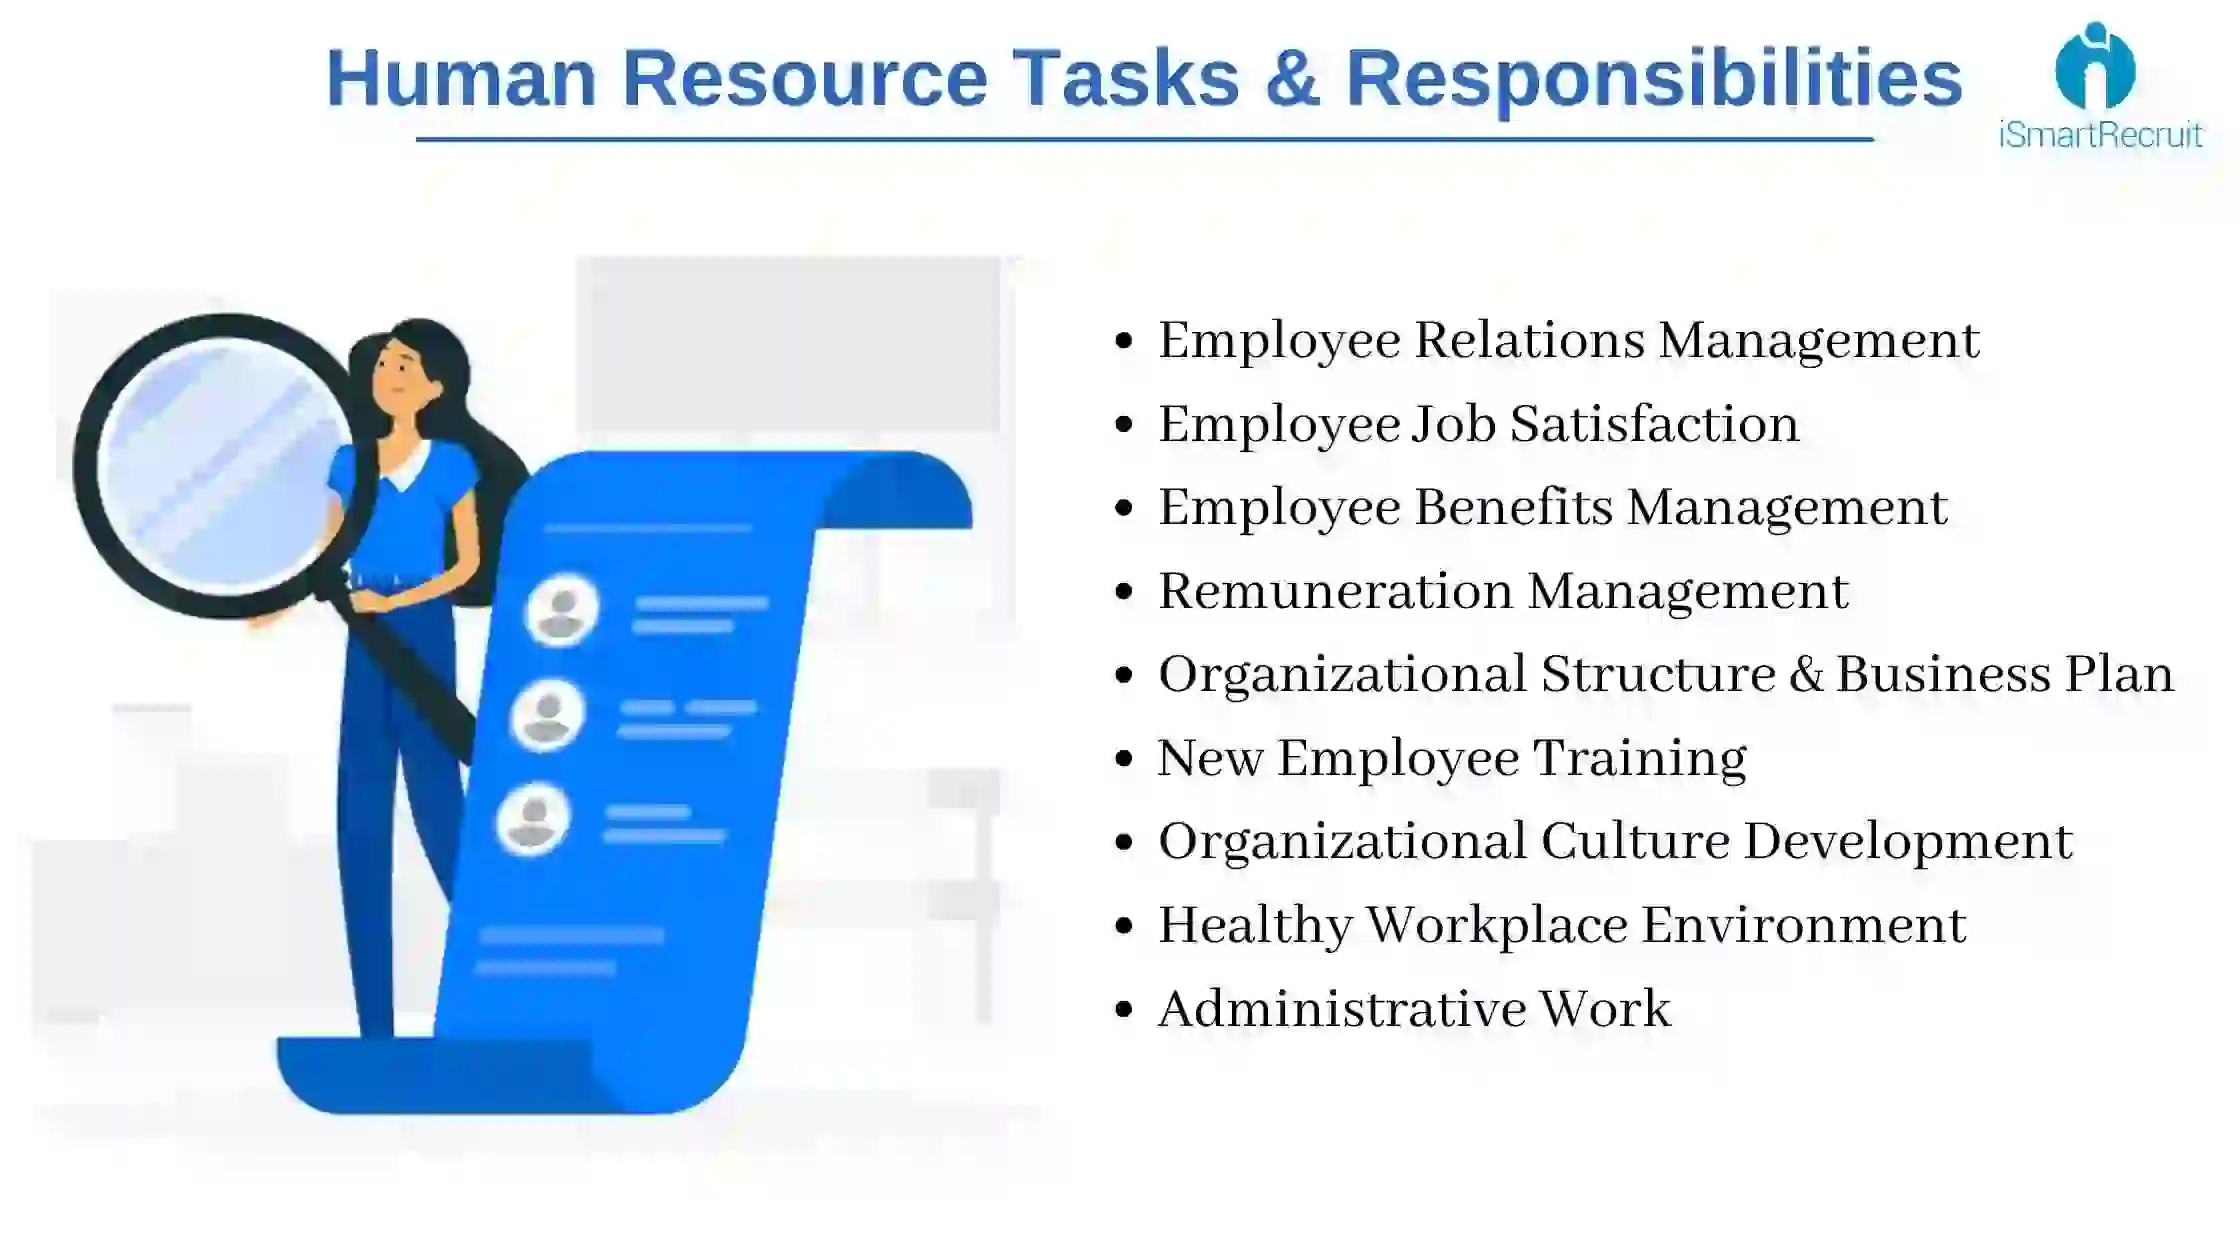 Human resources task responsibilities